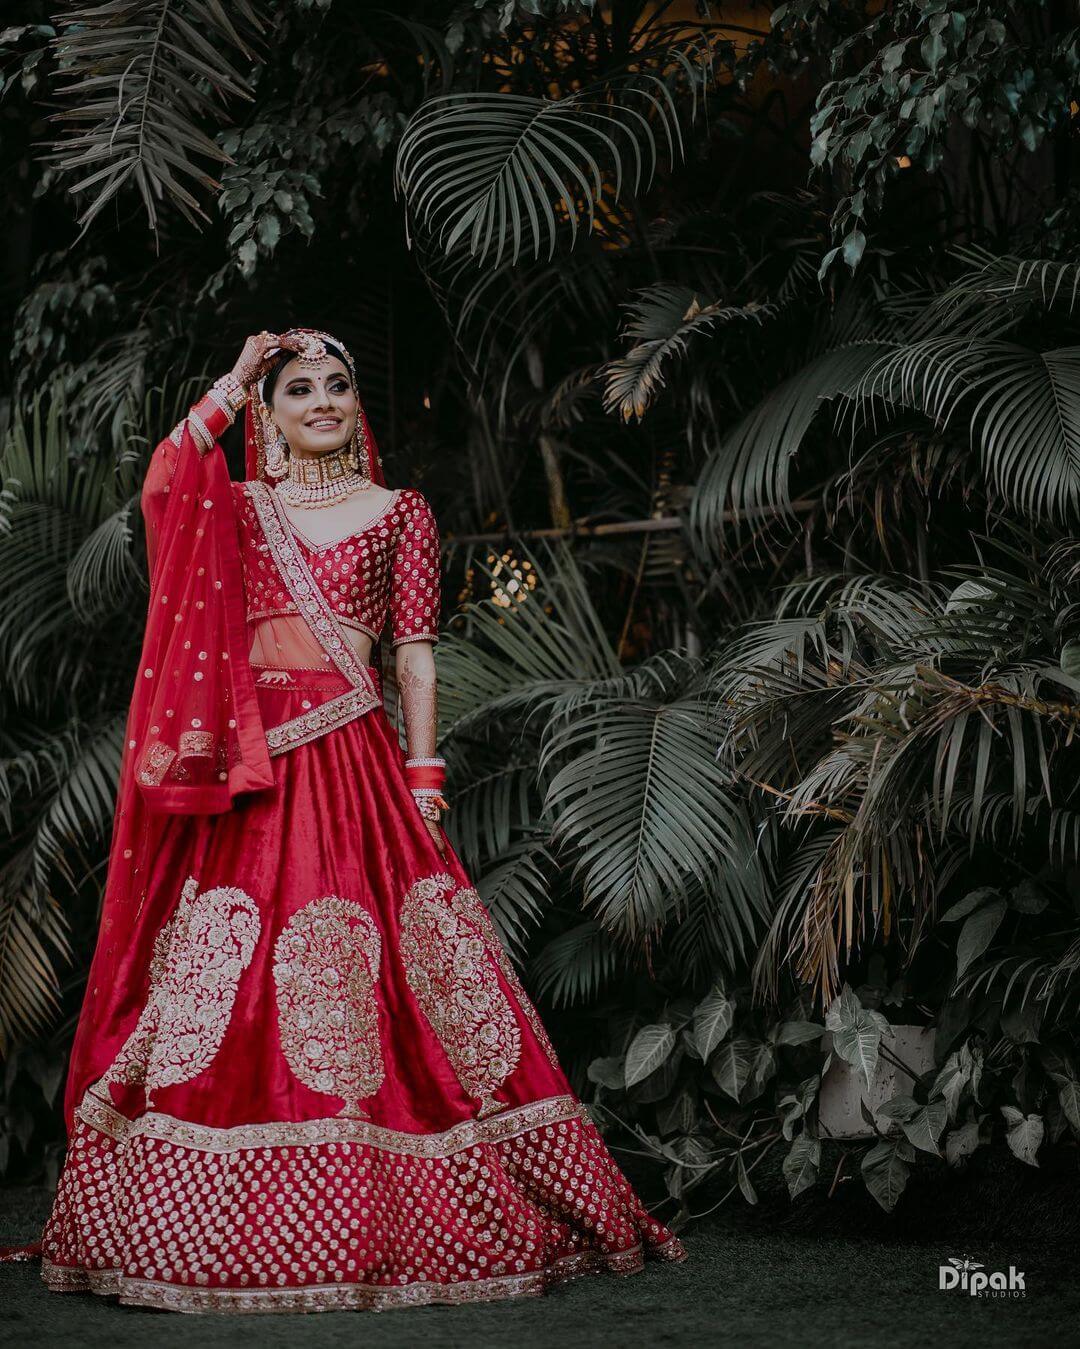 That Dark Red Shining Lehenga  Stunning Sabyasachi Lehengas Spotted On Real Brides